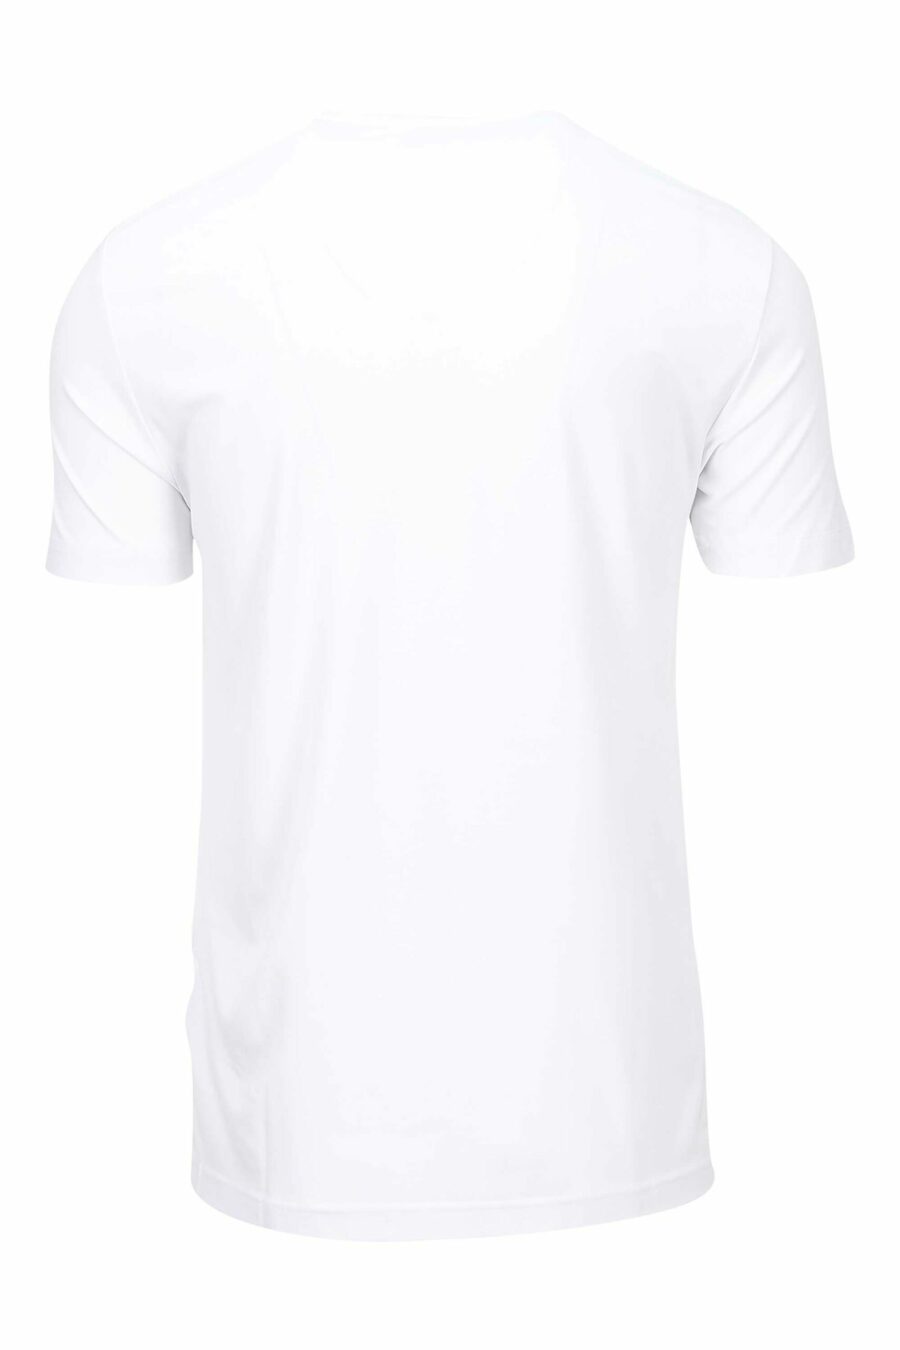 T-shirt blanc avec mini logo "lux identity" - 8056787978898 1 scaled